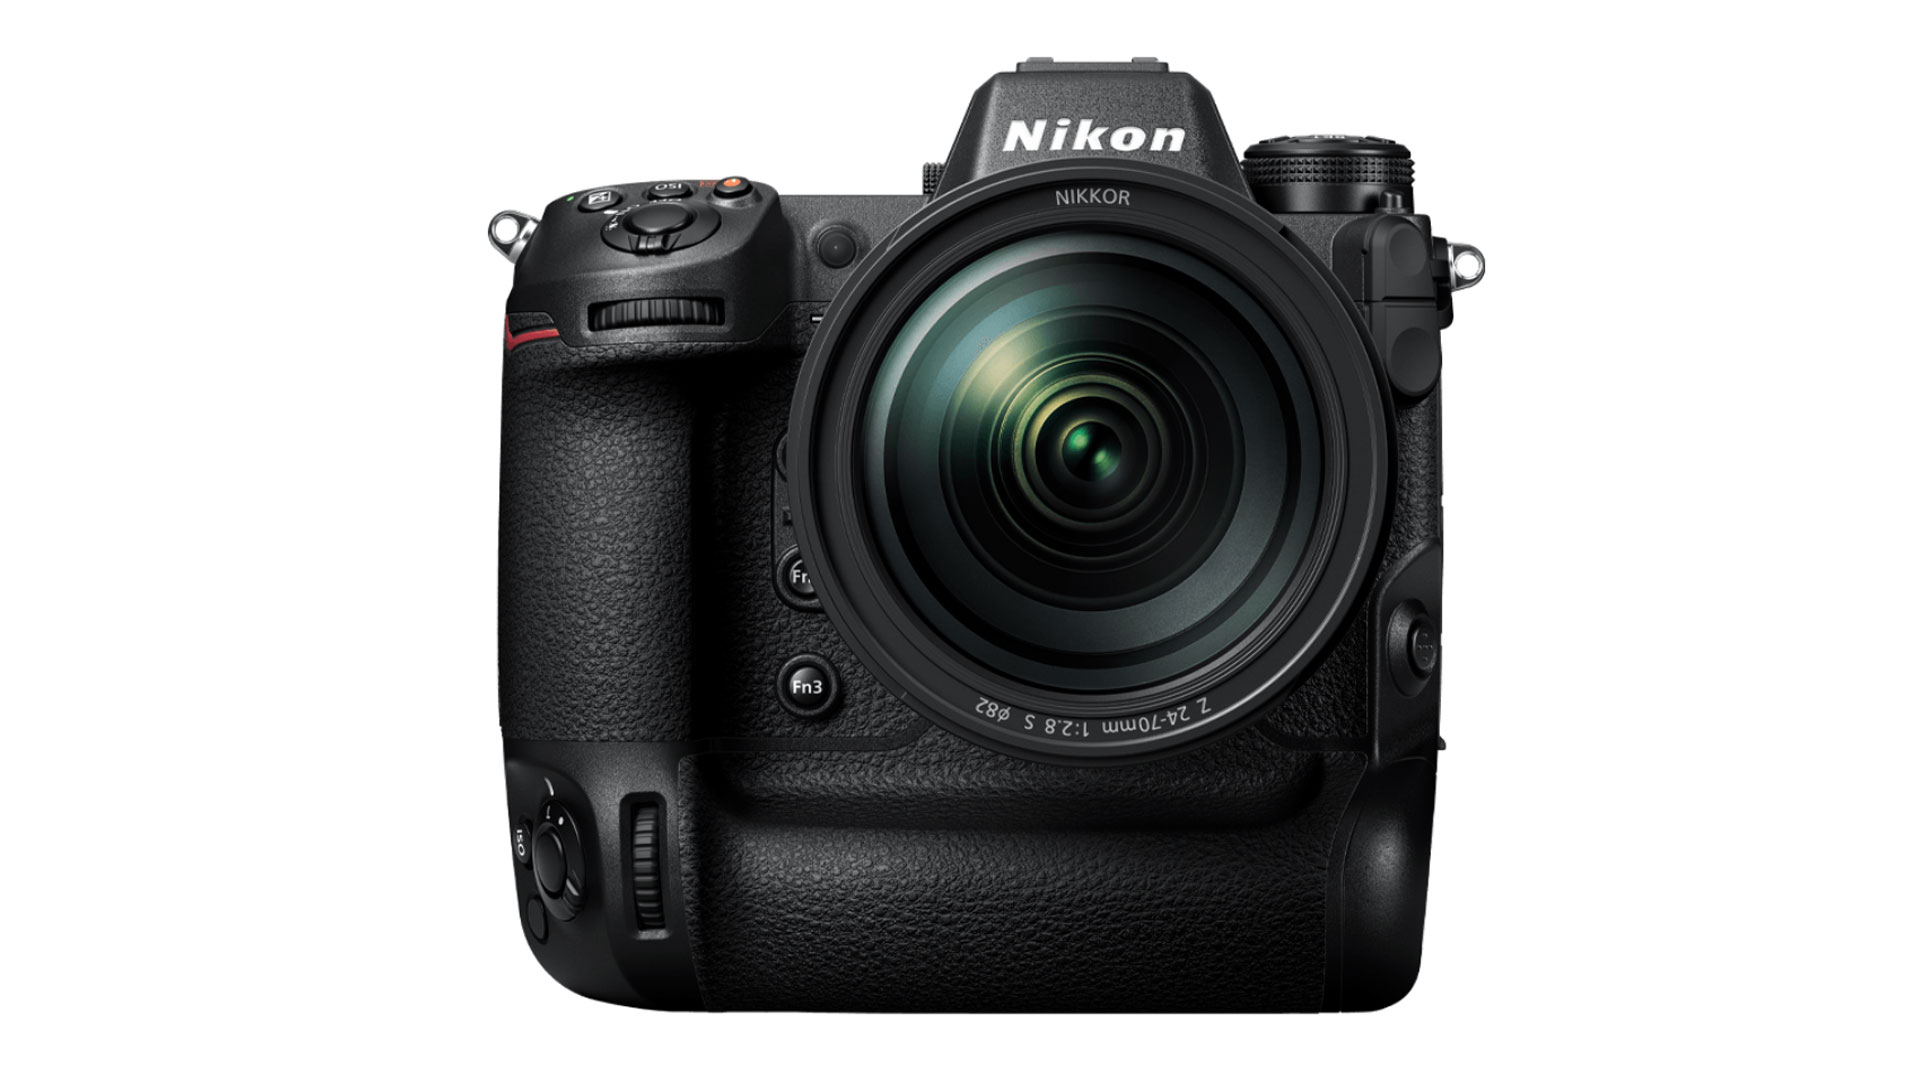 The Nikon Z9 mirrorless camera